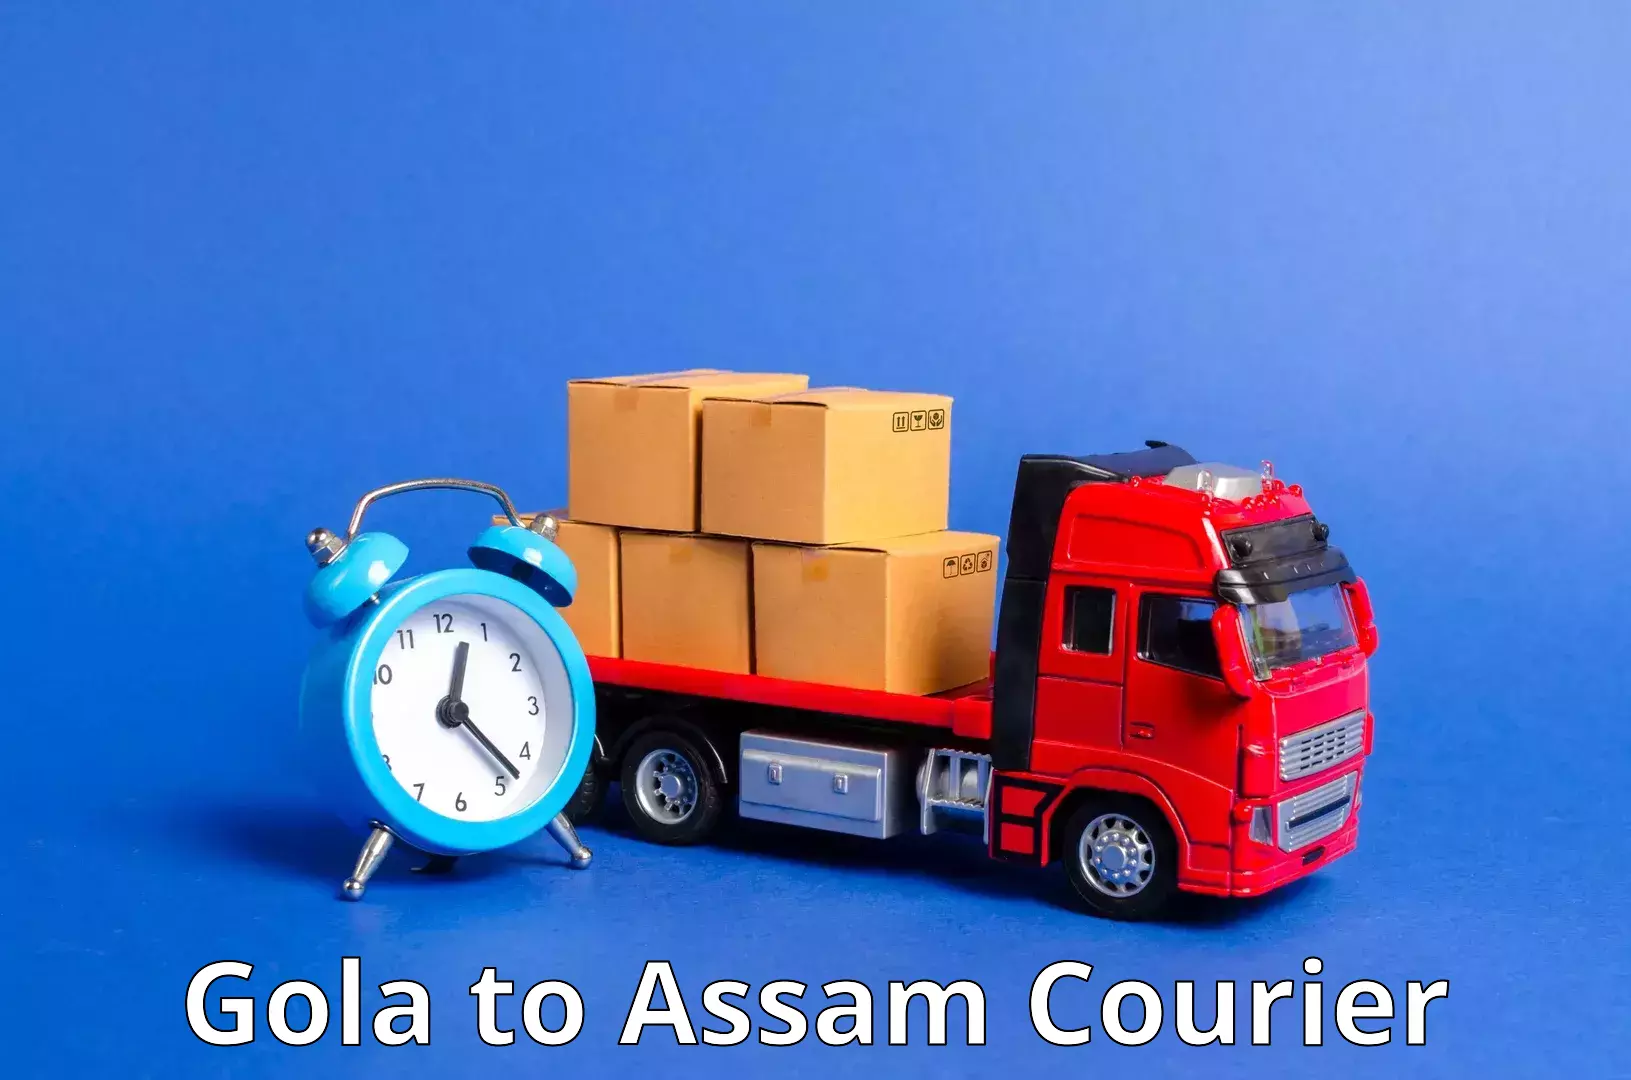 Express postal services Gola to Assam